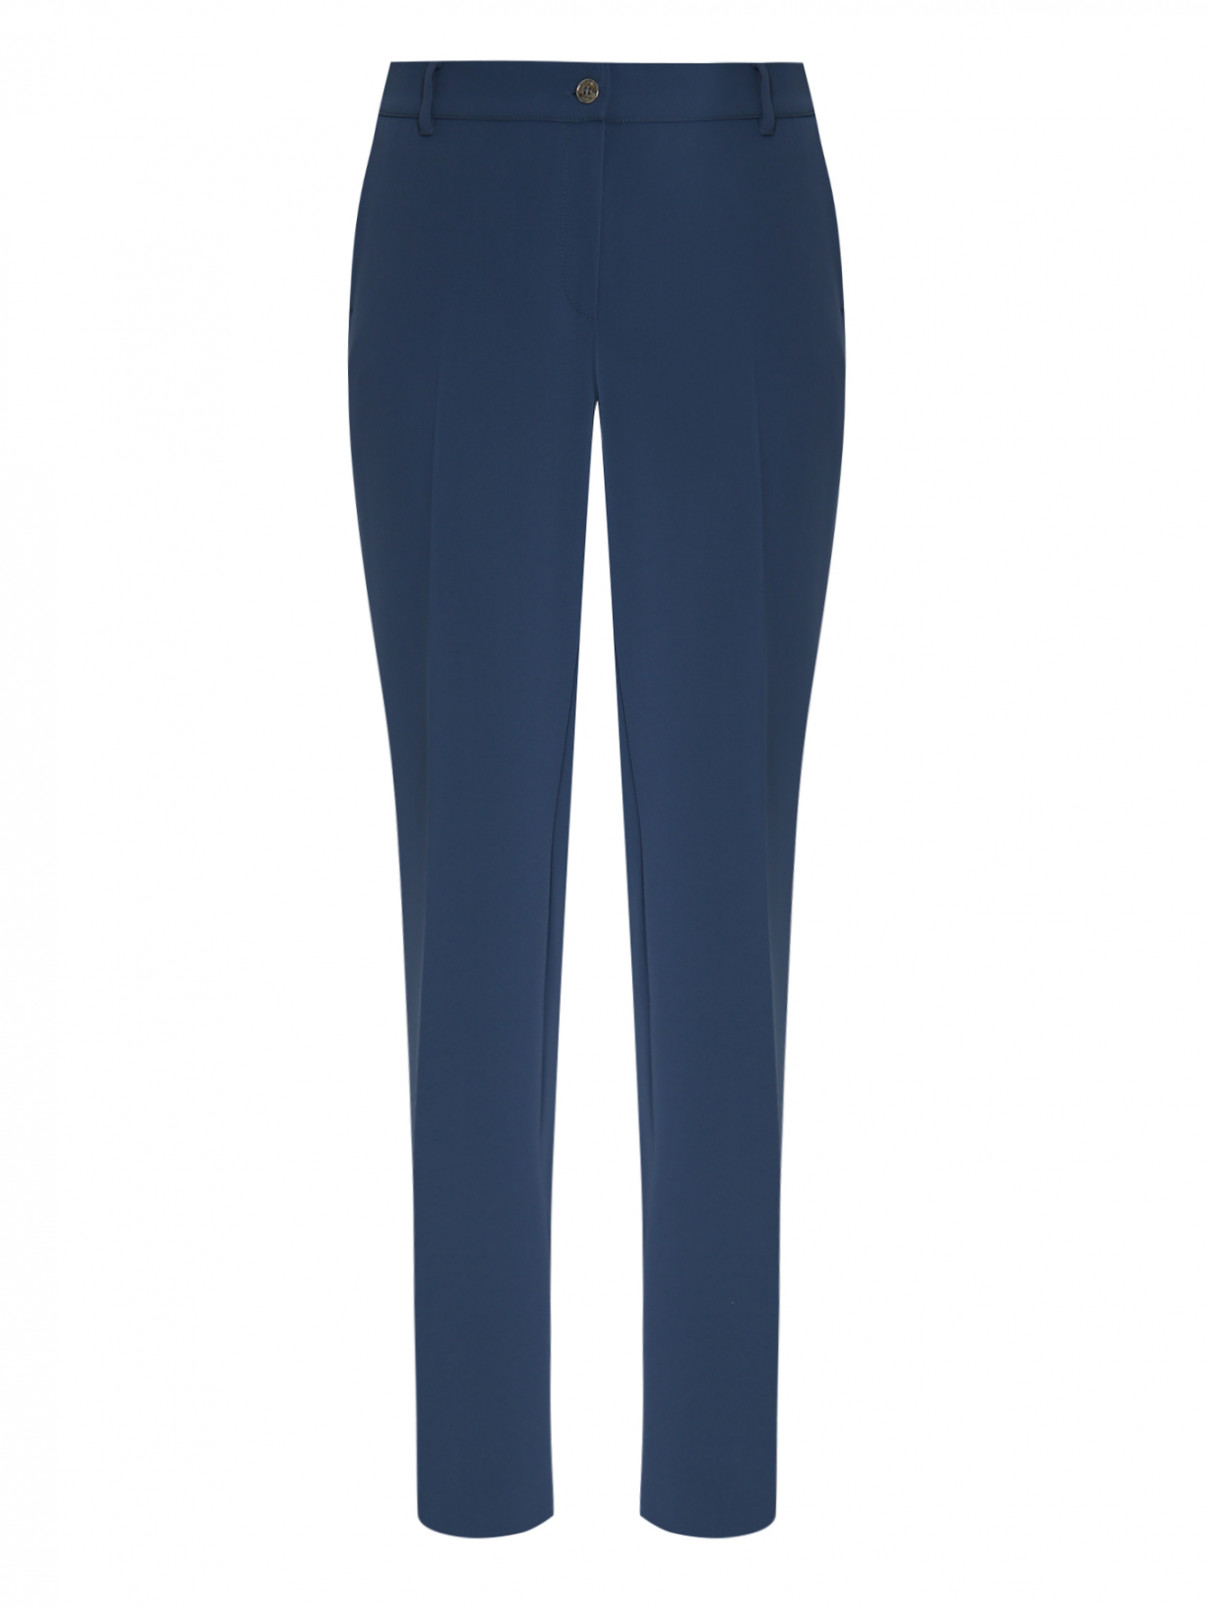 Широкие брюки прямого кроя Voyage by Marina Rinaldi  –  Общий вид  – Цвет:  Синий